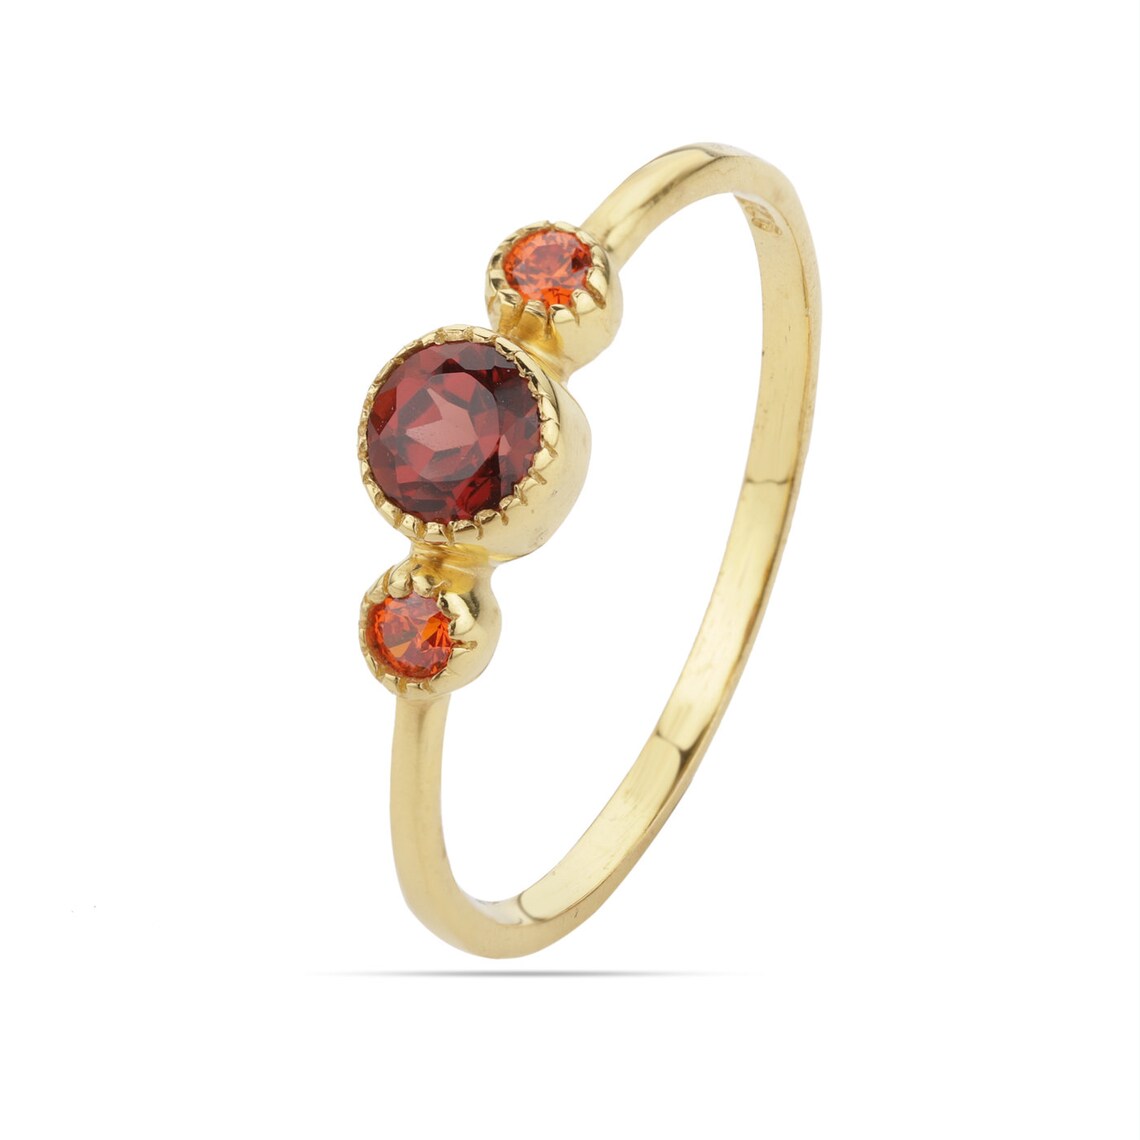 Natural Garnet Minimalist Ring - Garnet Multi Stones Ring - Tiny Garnet Ring - Red Stone Ring - Three Stone Ring - Gemstone Ring - Gold Ring